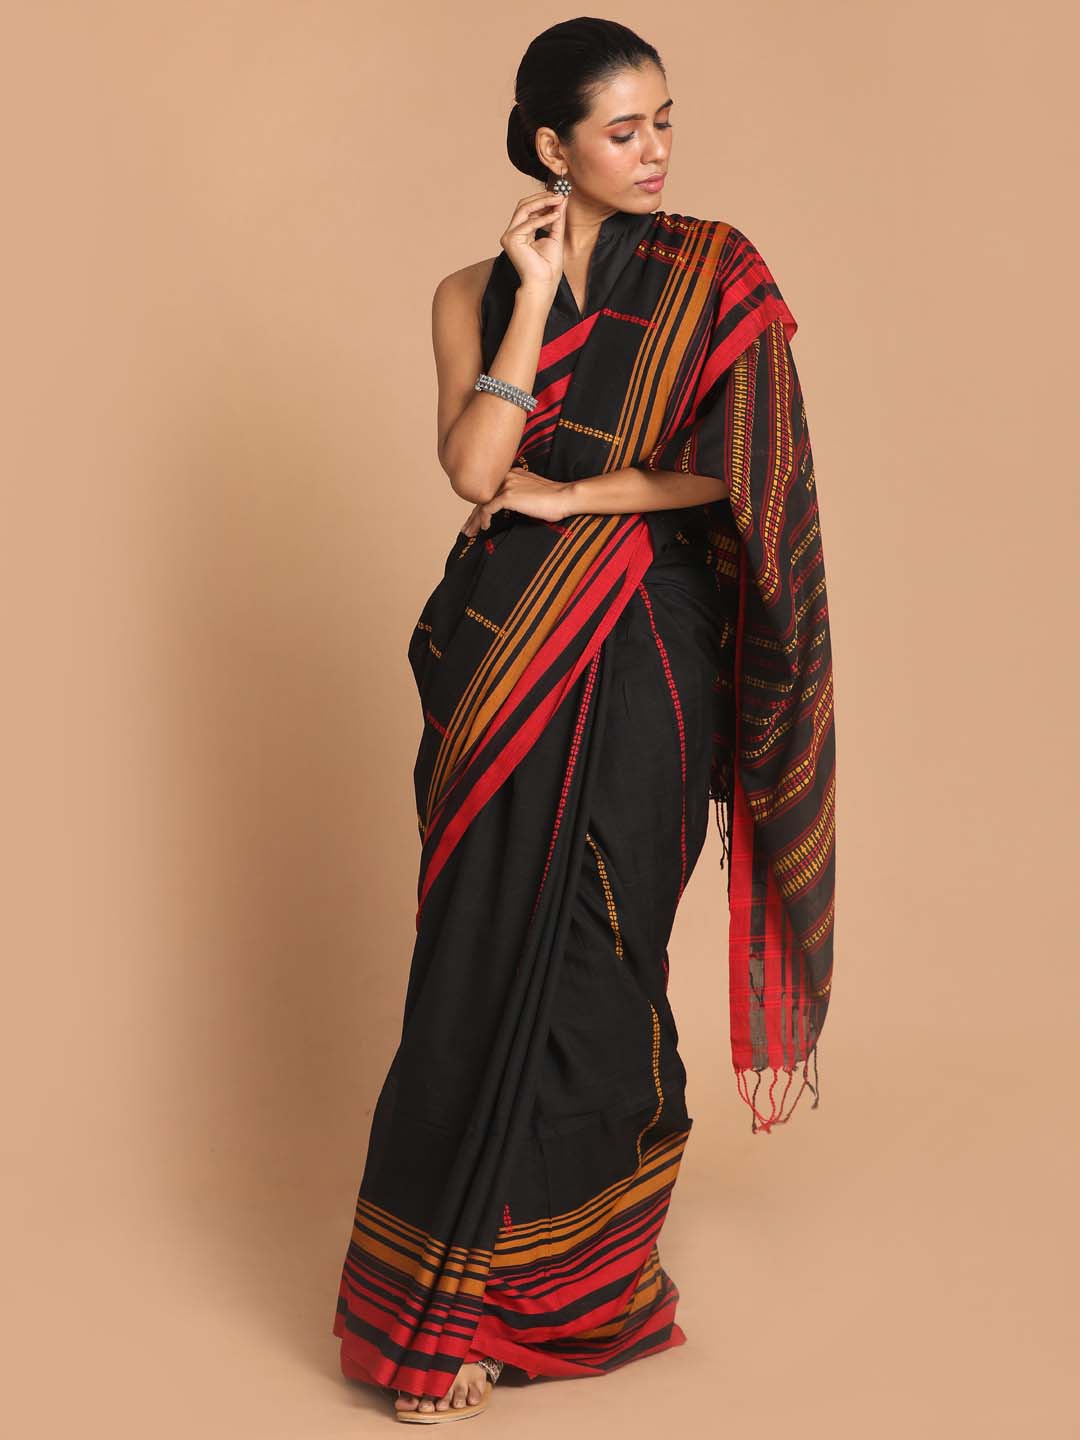 Buy Bengal Handloom Sarees online, Pure Bengal Handloom Sarees, Trendy Bengal  Handloom Sarees, online shopping india, sarees, apparel in india |  www.maanacreation.com